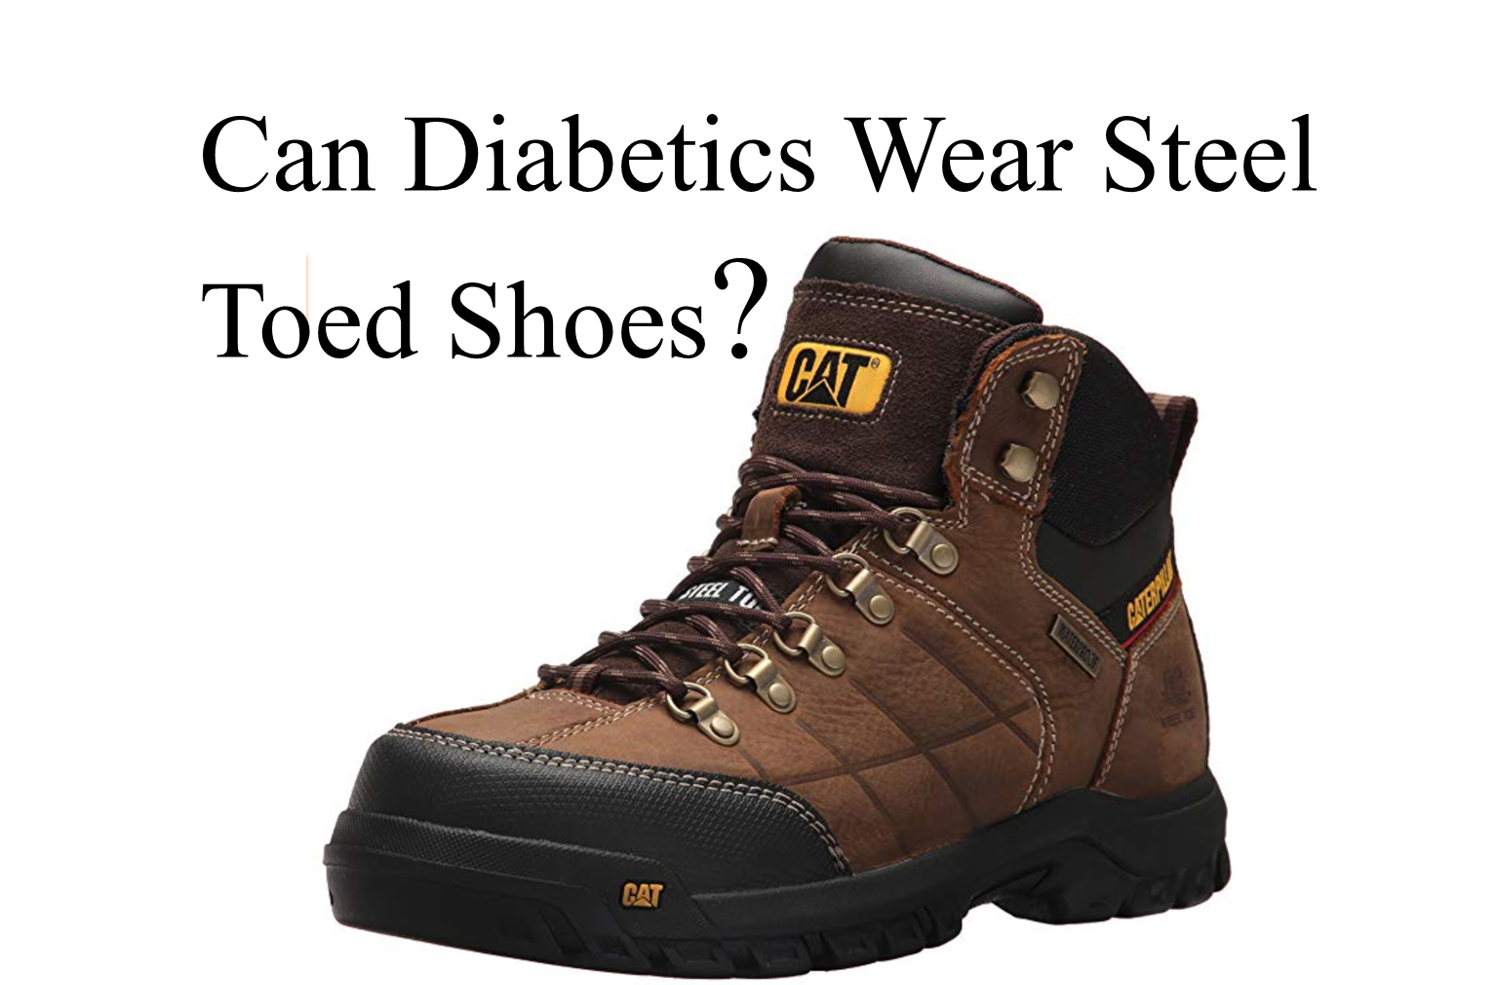 best work boots for diabetics